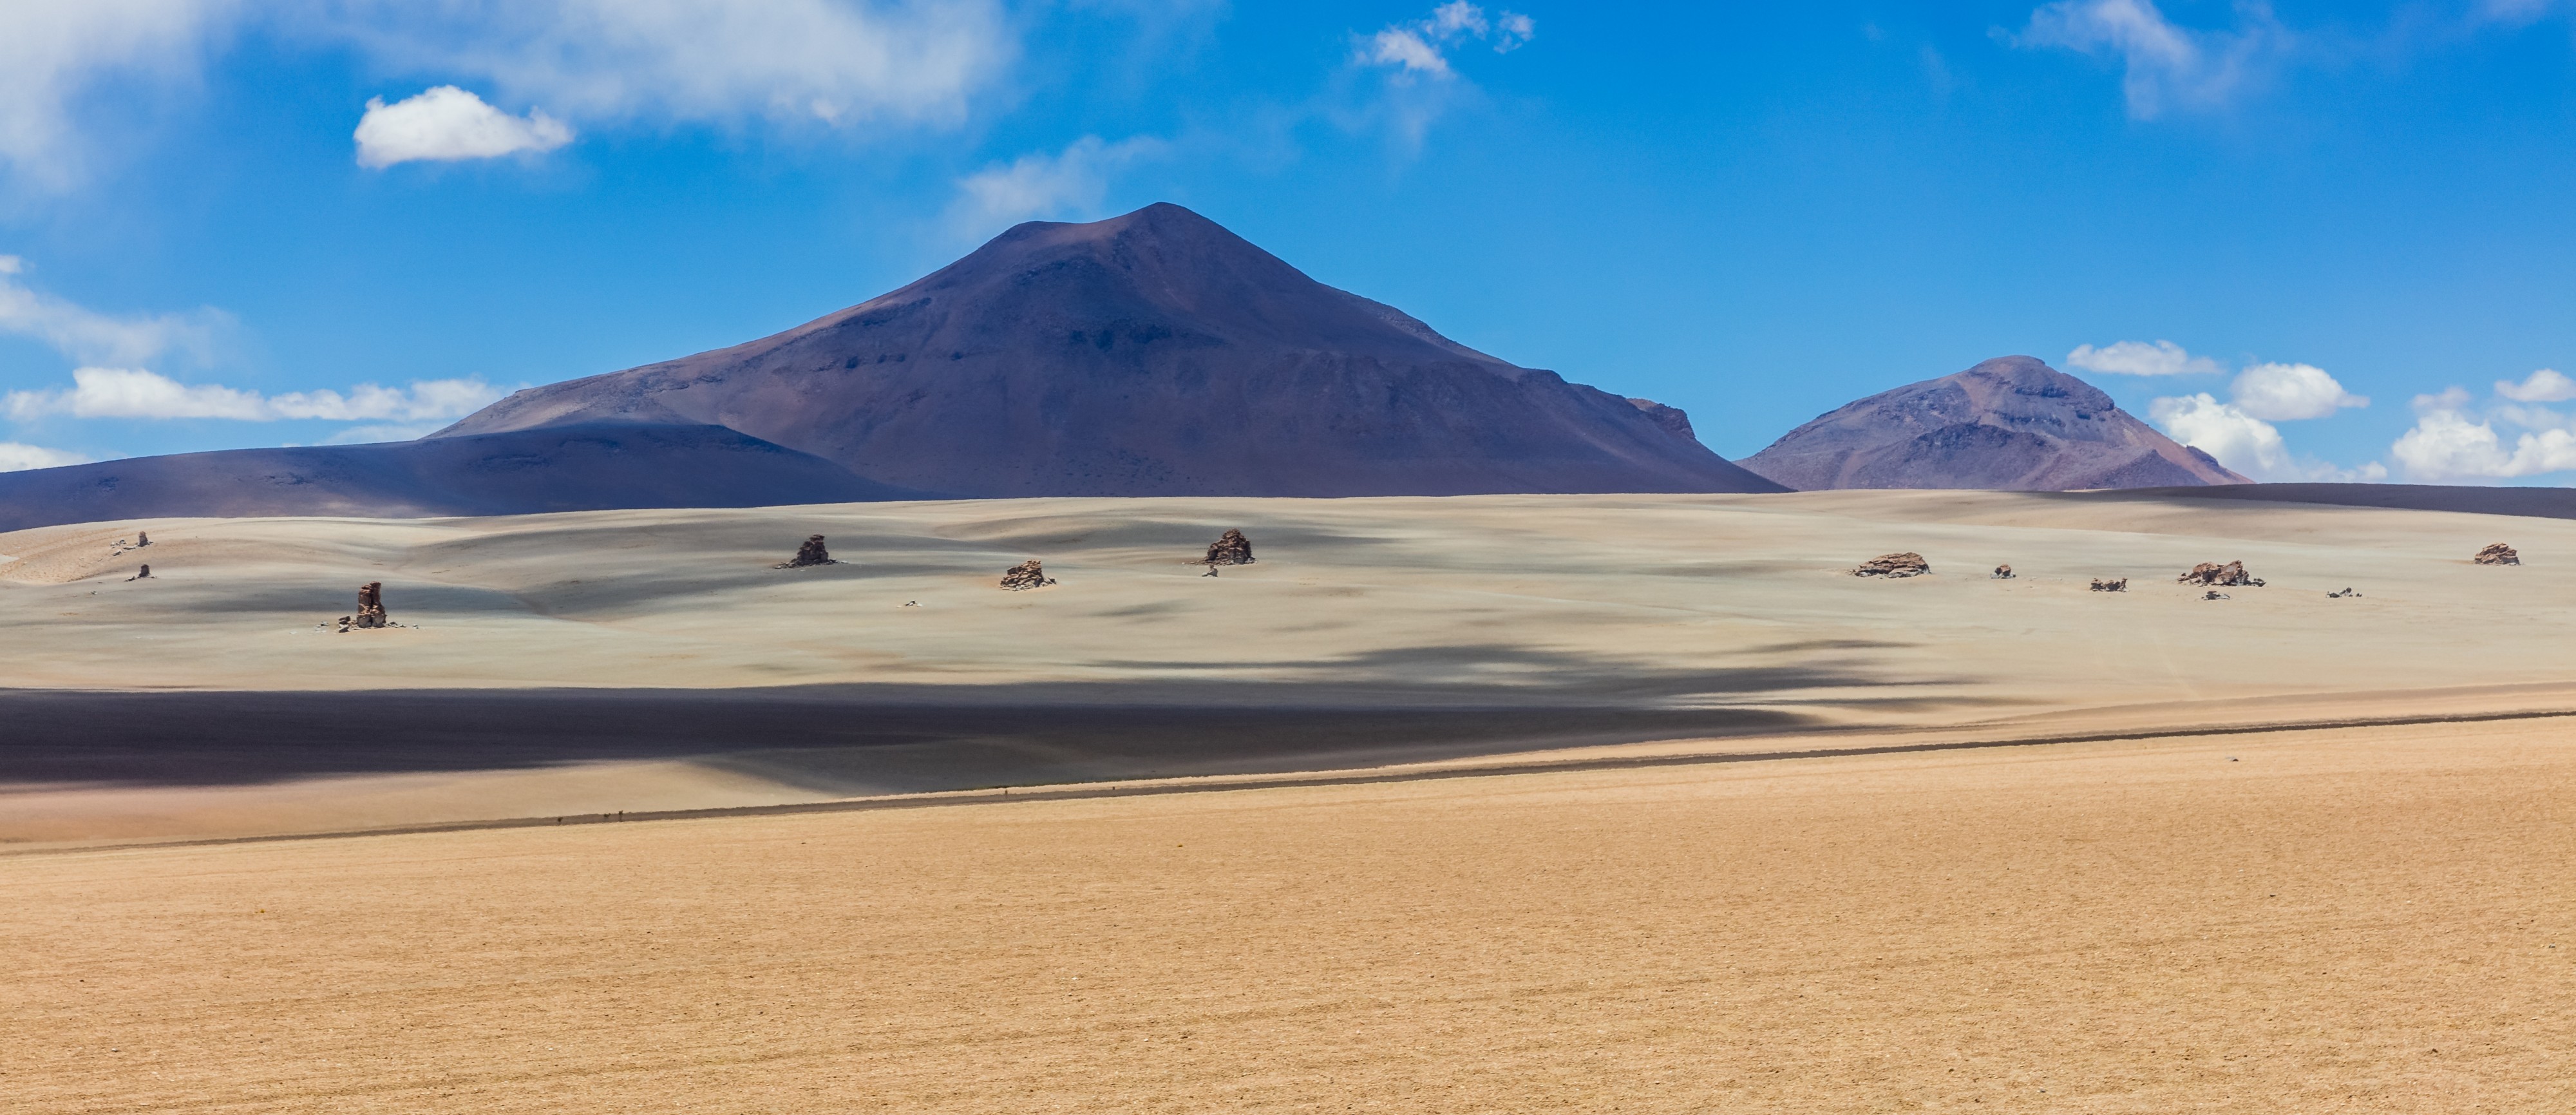 Desierto de Dalí, Bolivia, 2016-02-02, DD 107